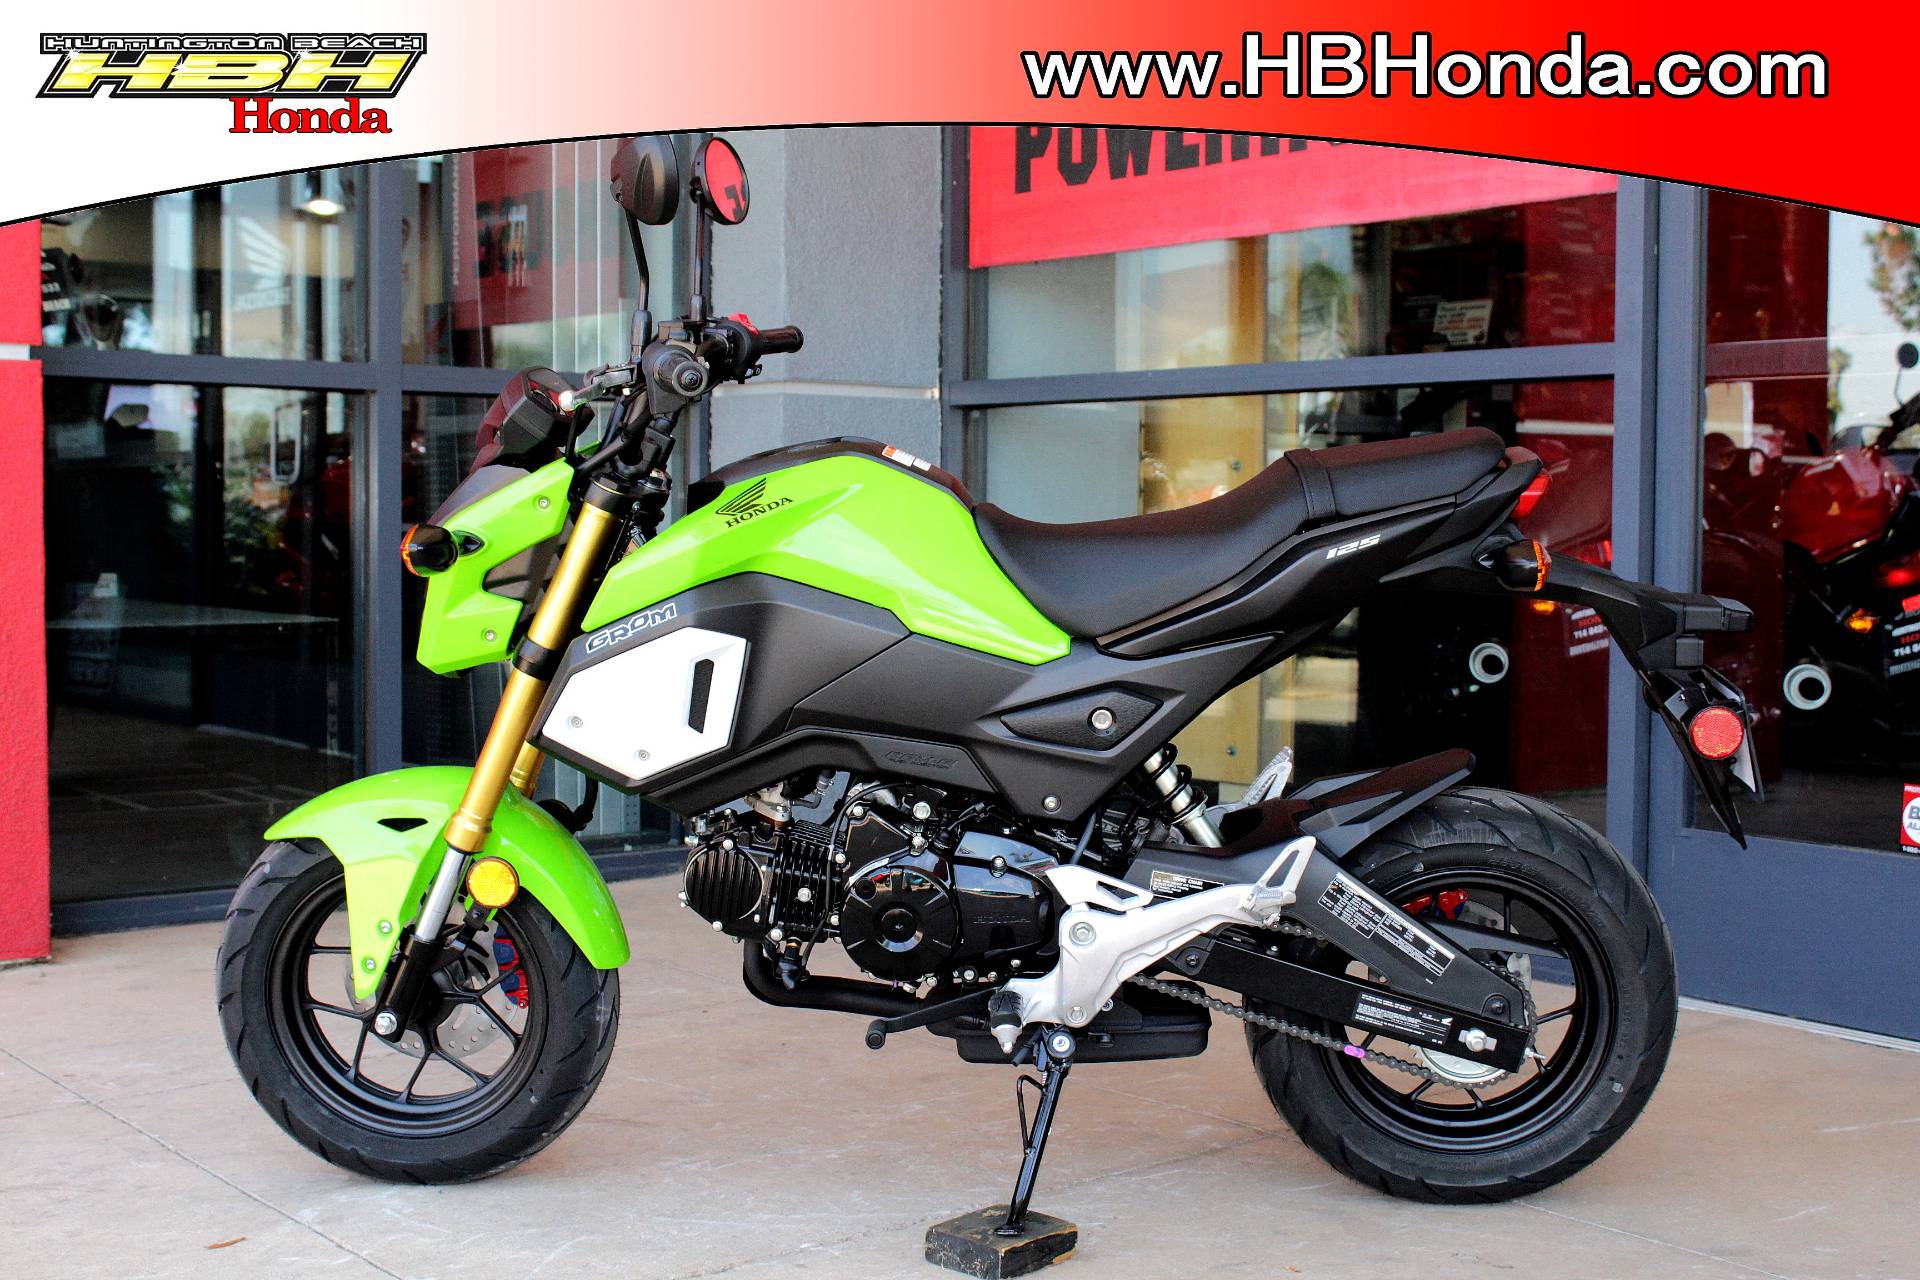 New Honda Grom For Sale 2020 Incredible Green Specs Photos Huntington Beach Ca M3256 7257